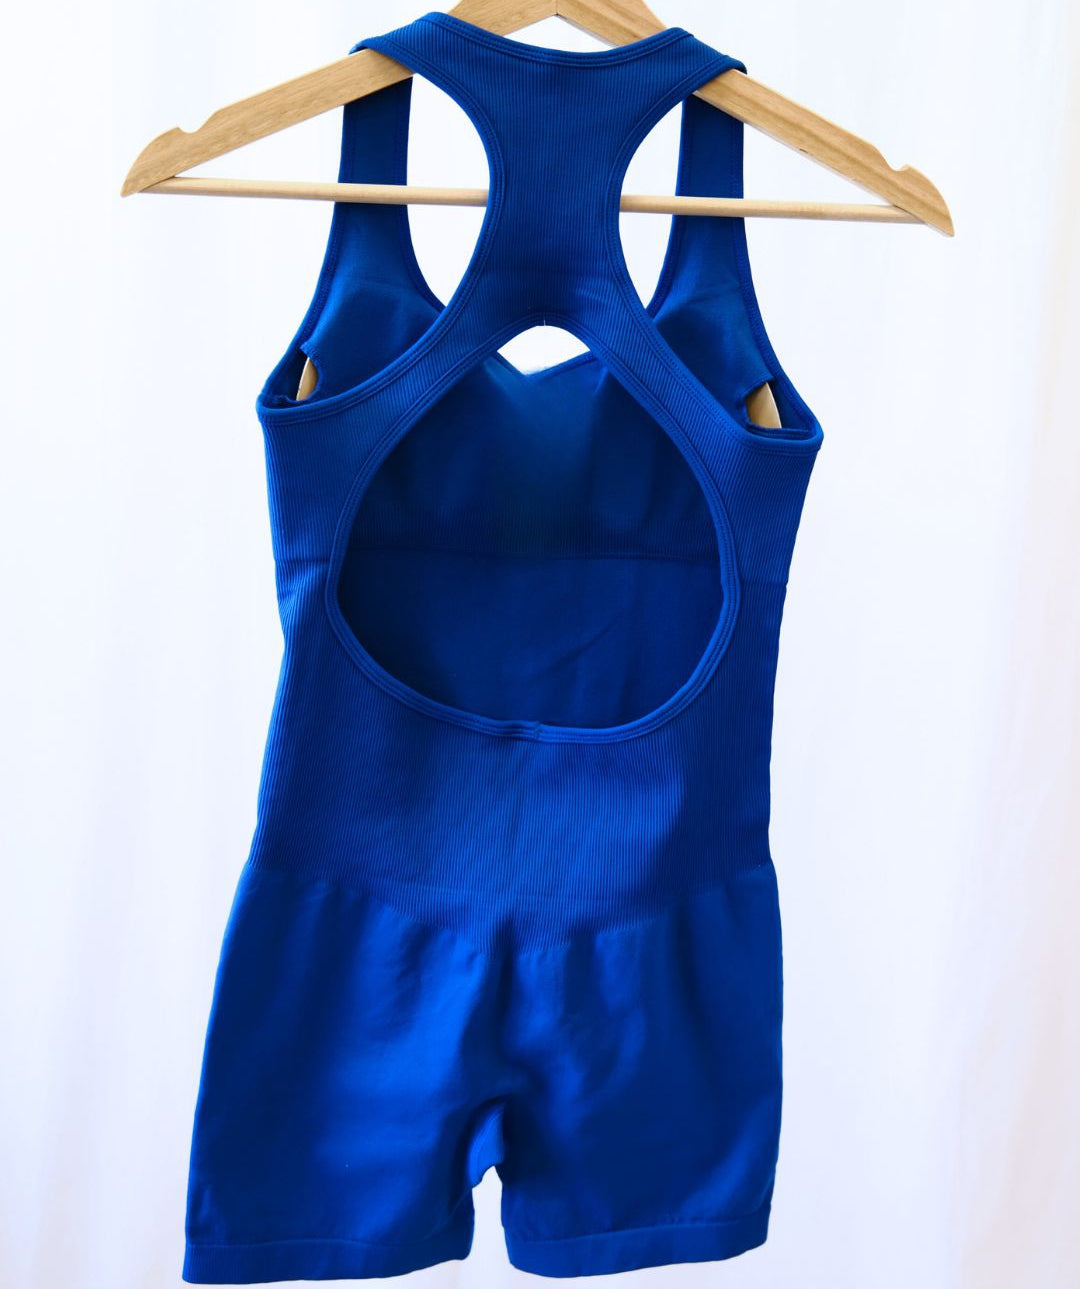 Jentle - Kira Bodyshorts (Blue)